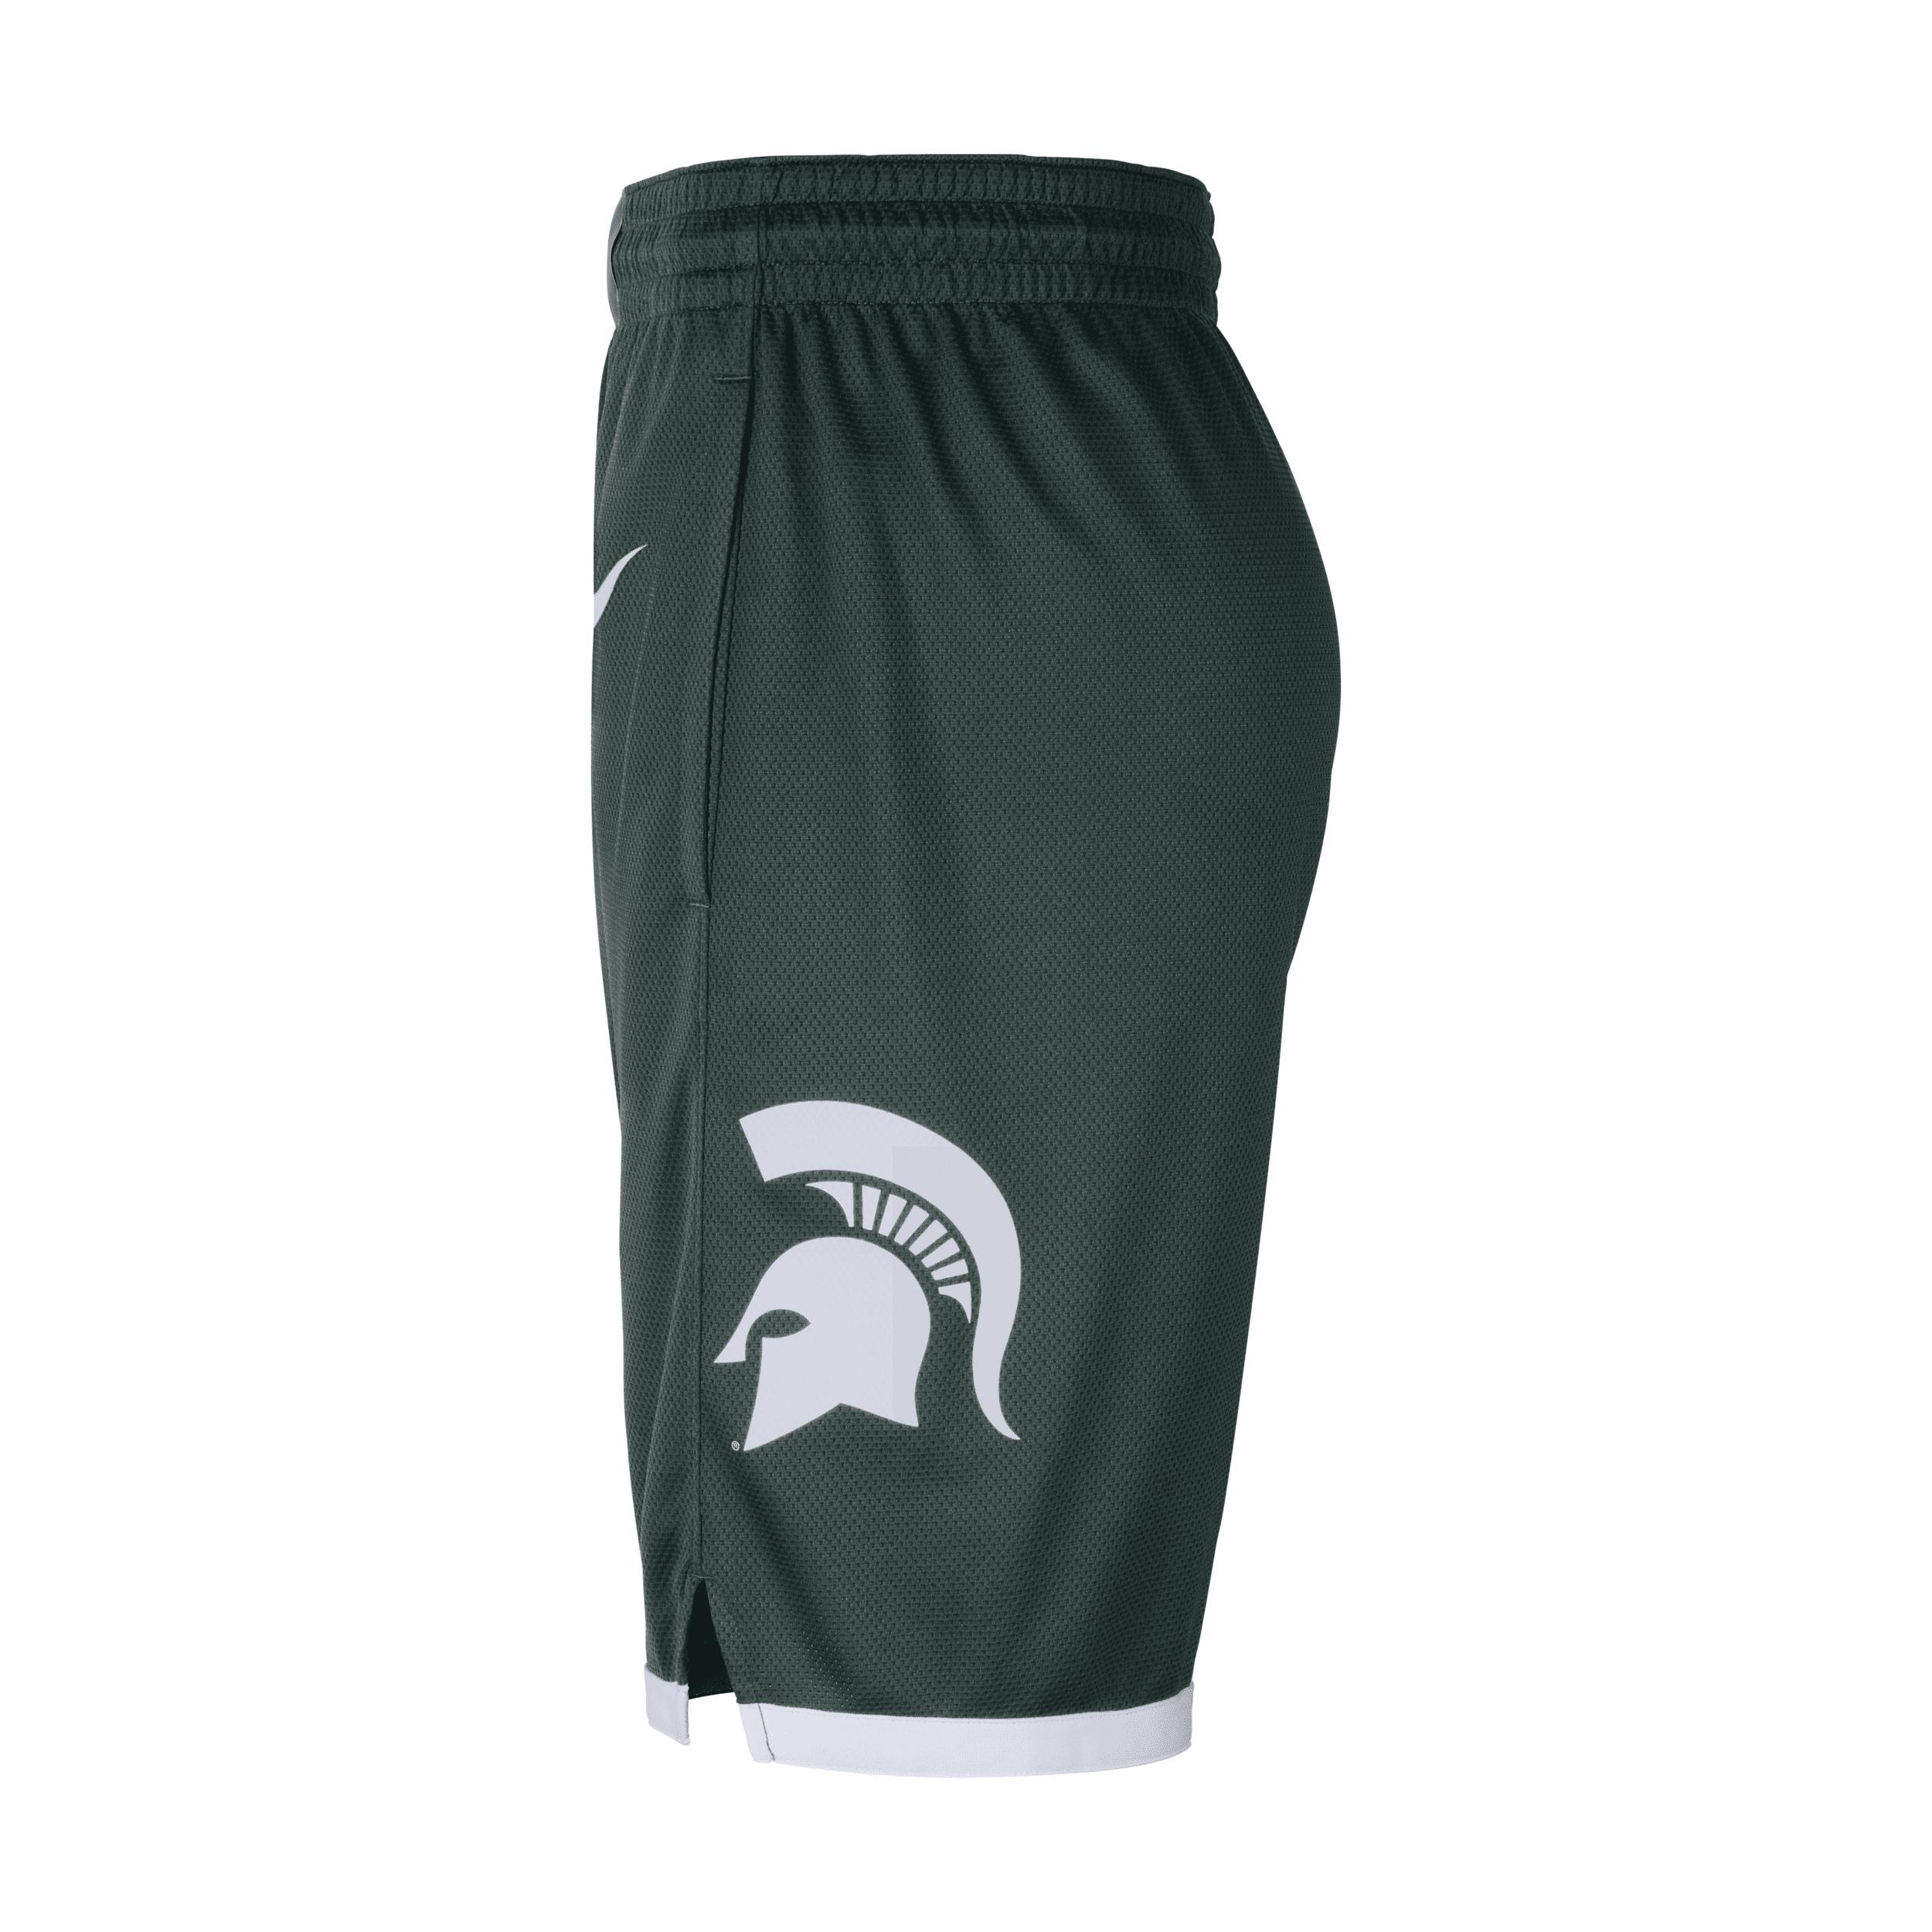 Nike Men's Michigan State Spartans Green Replica Basketball Shorts, Medium